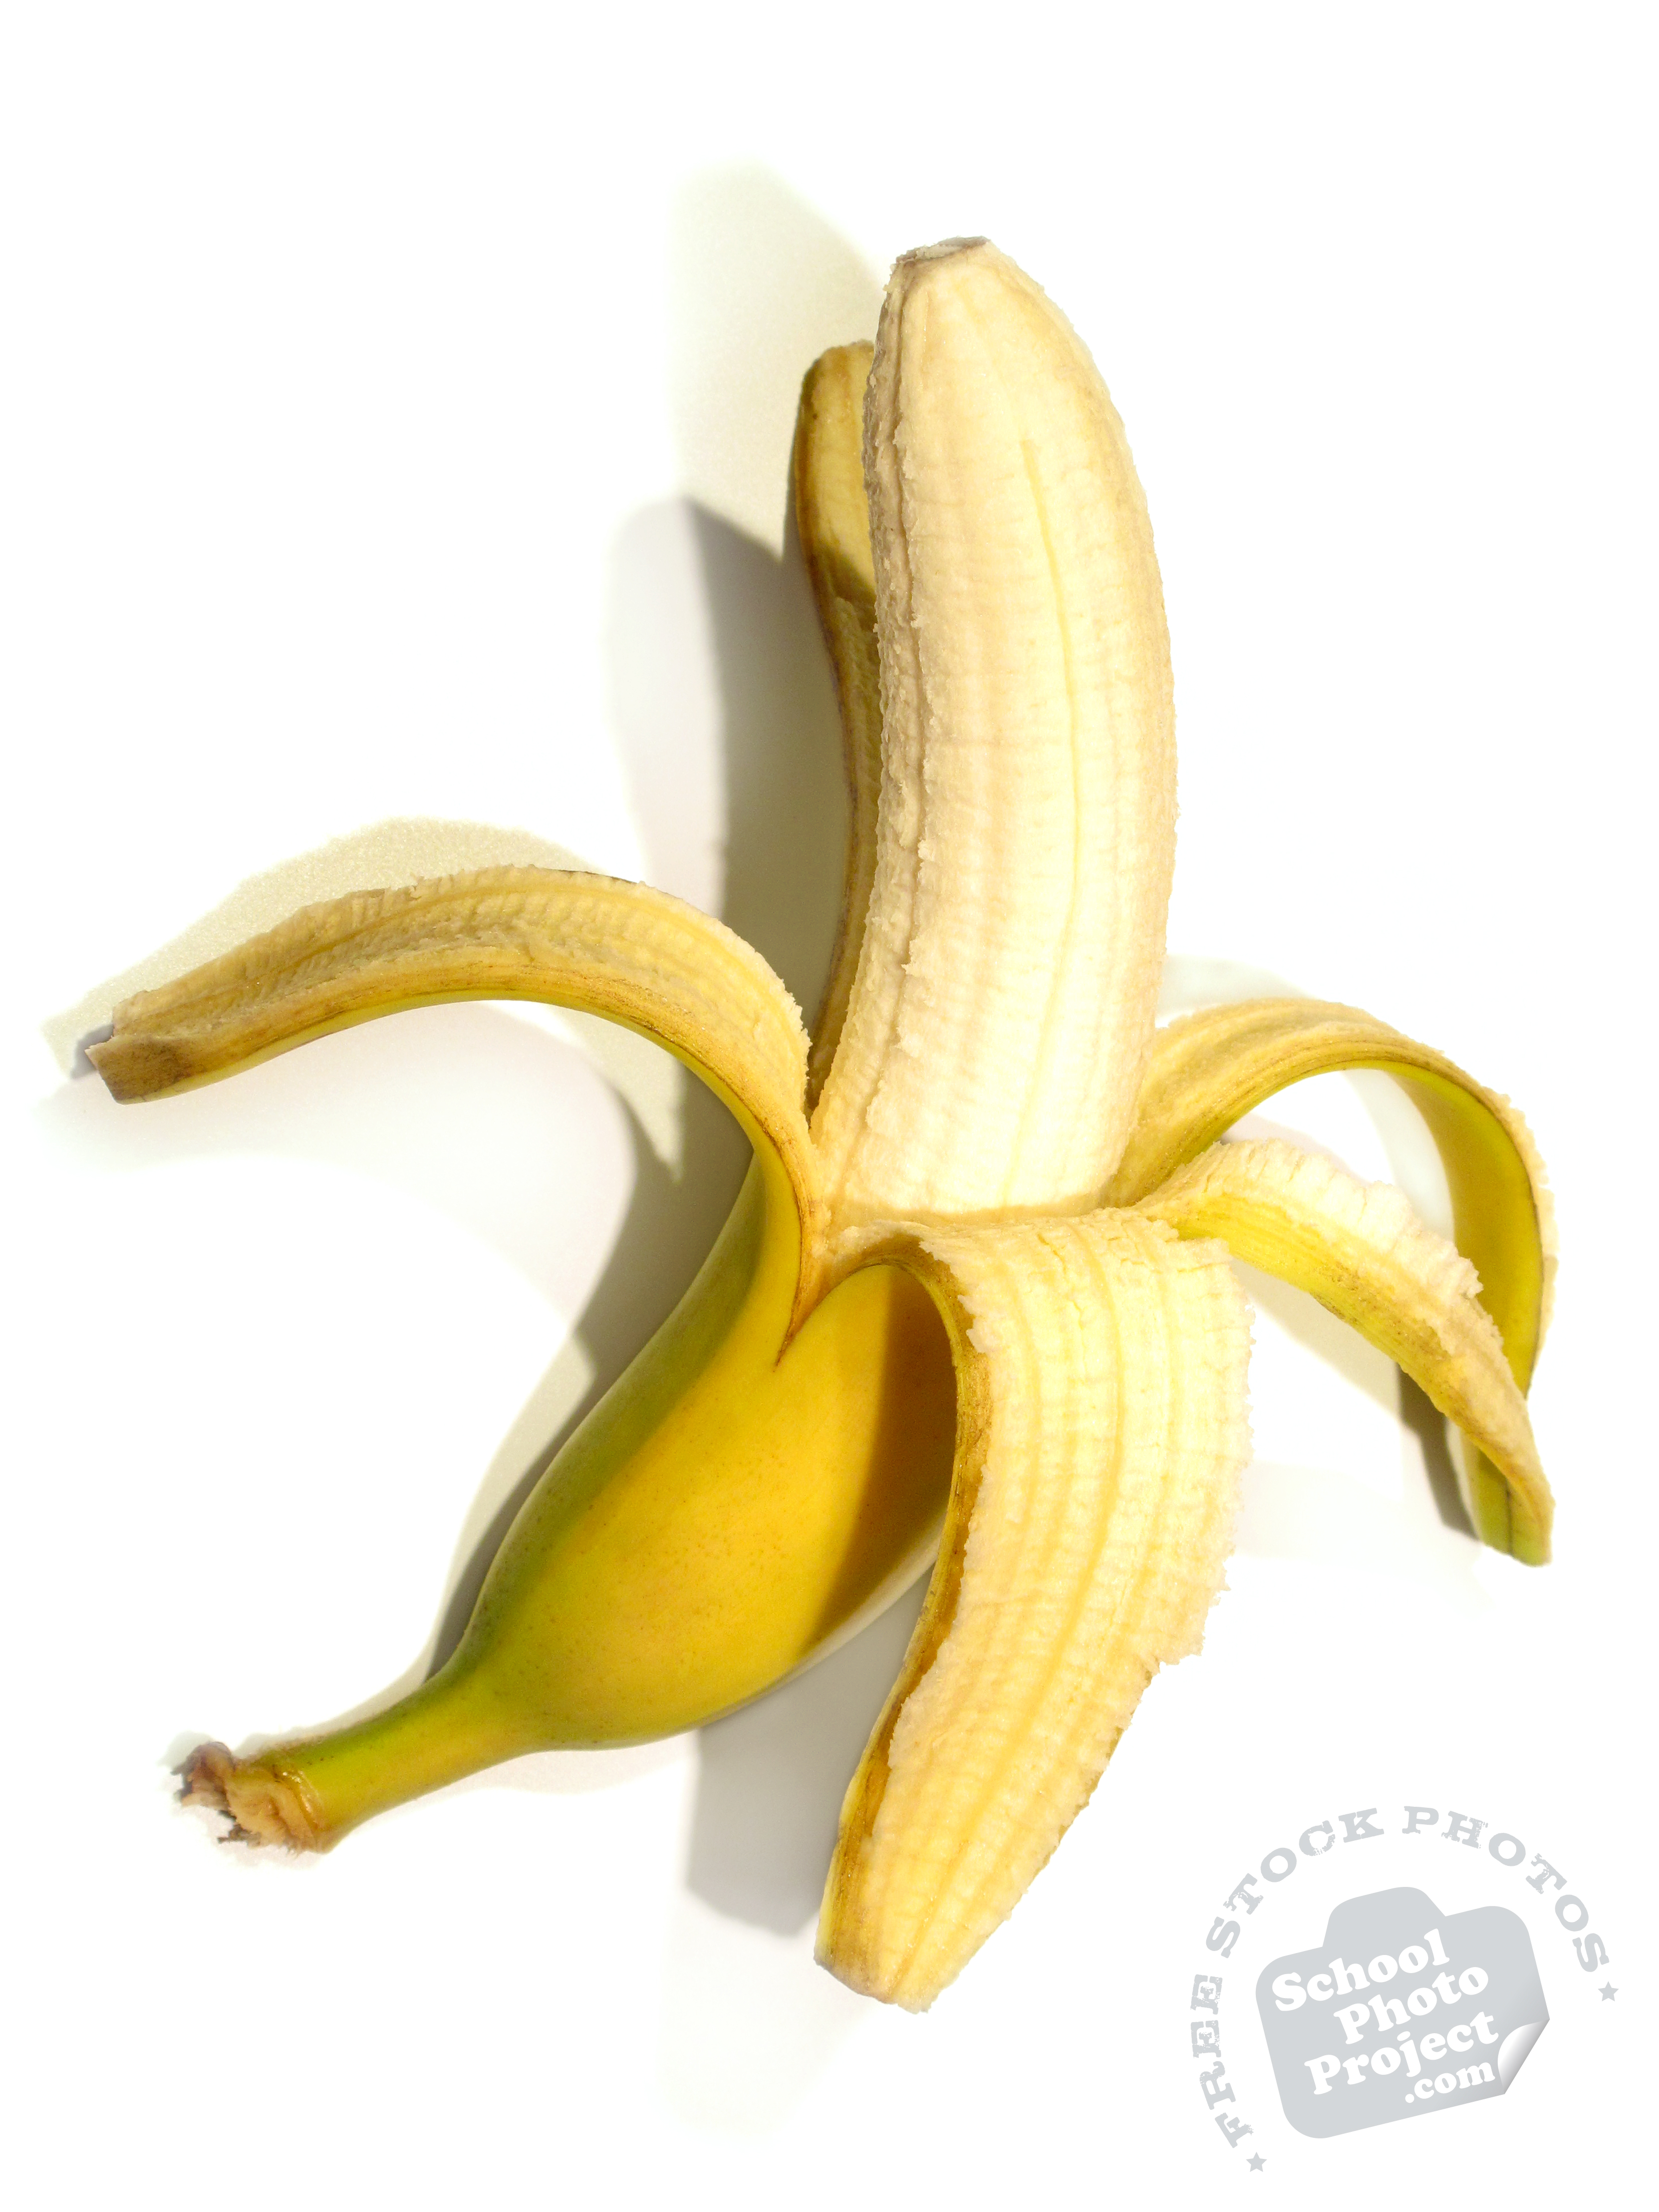 FREE Banana Photo, Peeled Banana Picture, Fresh Banana Image ...